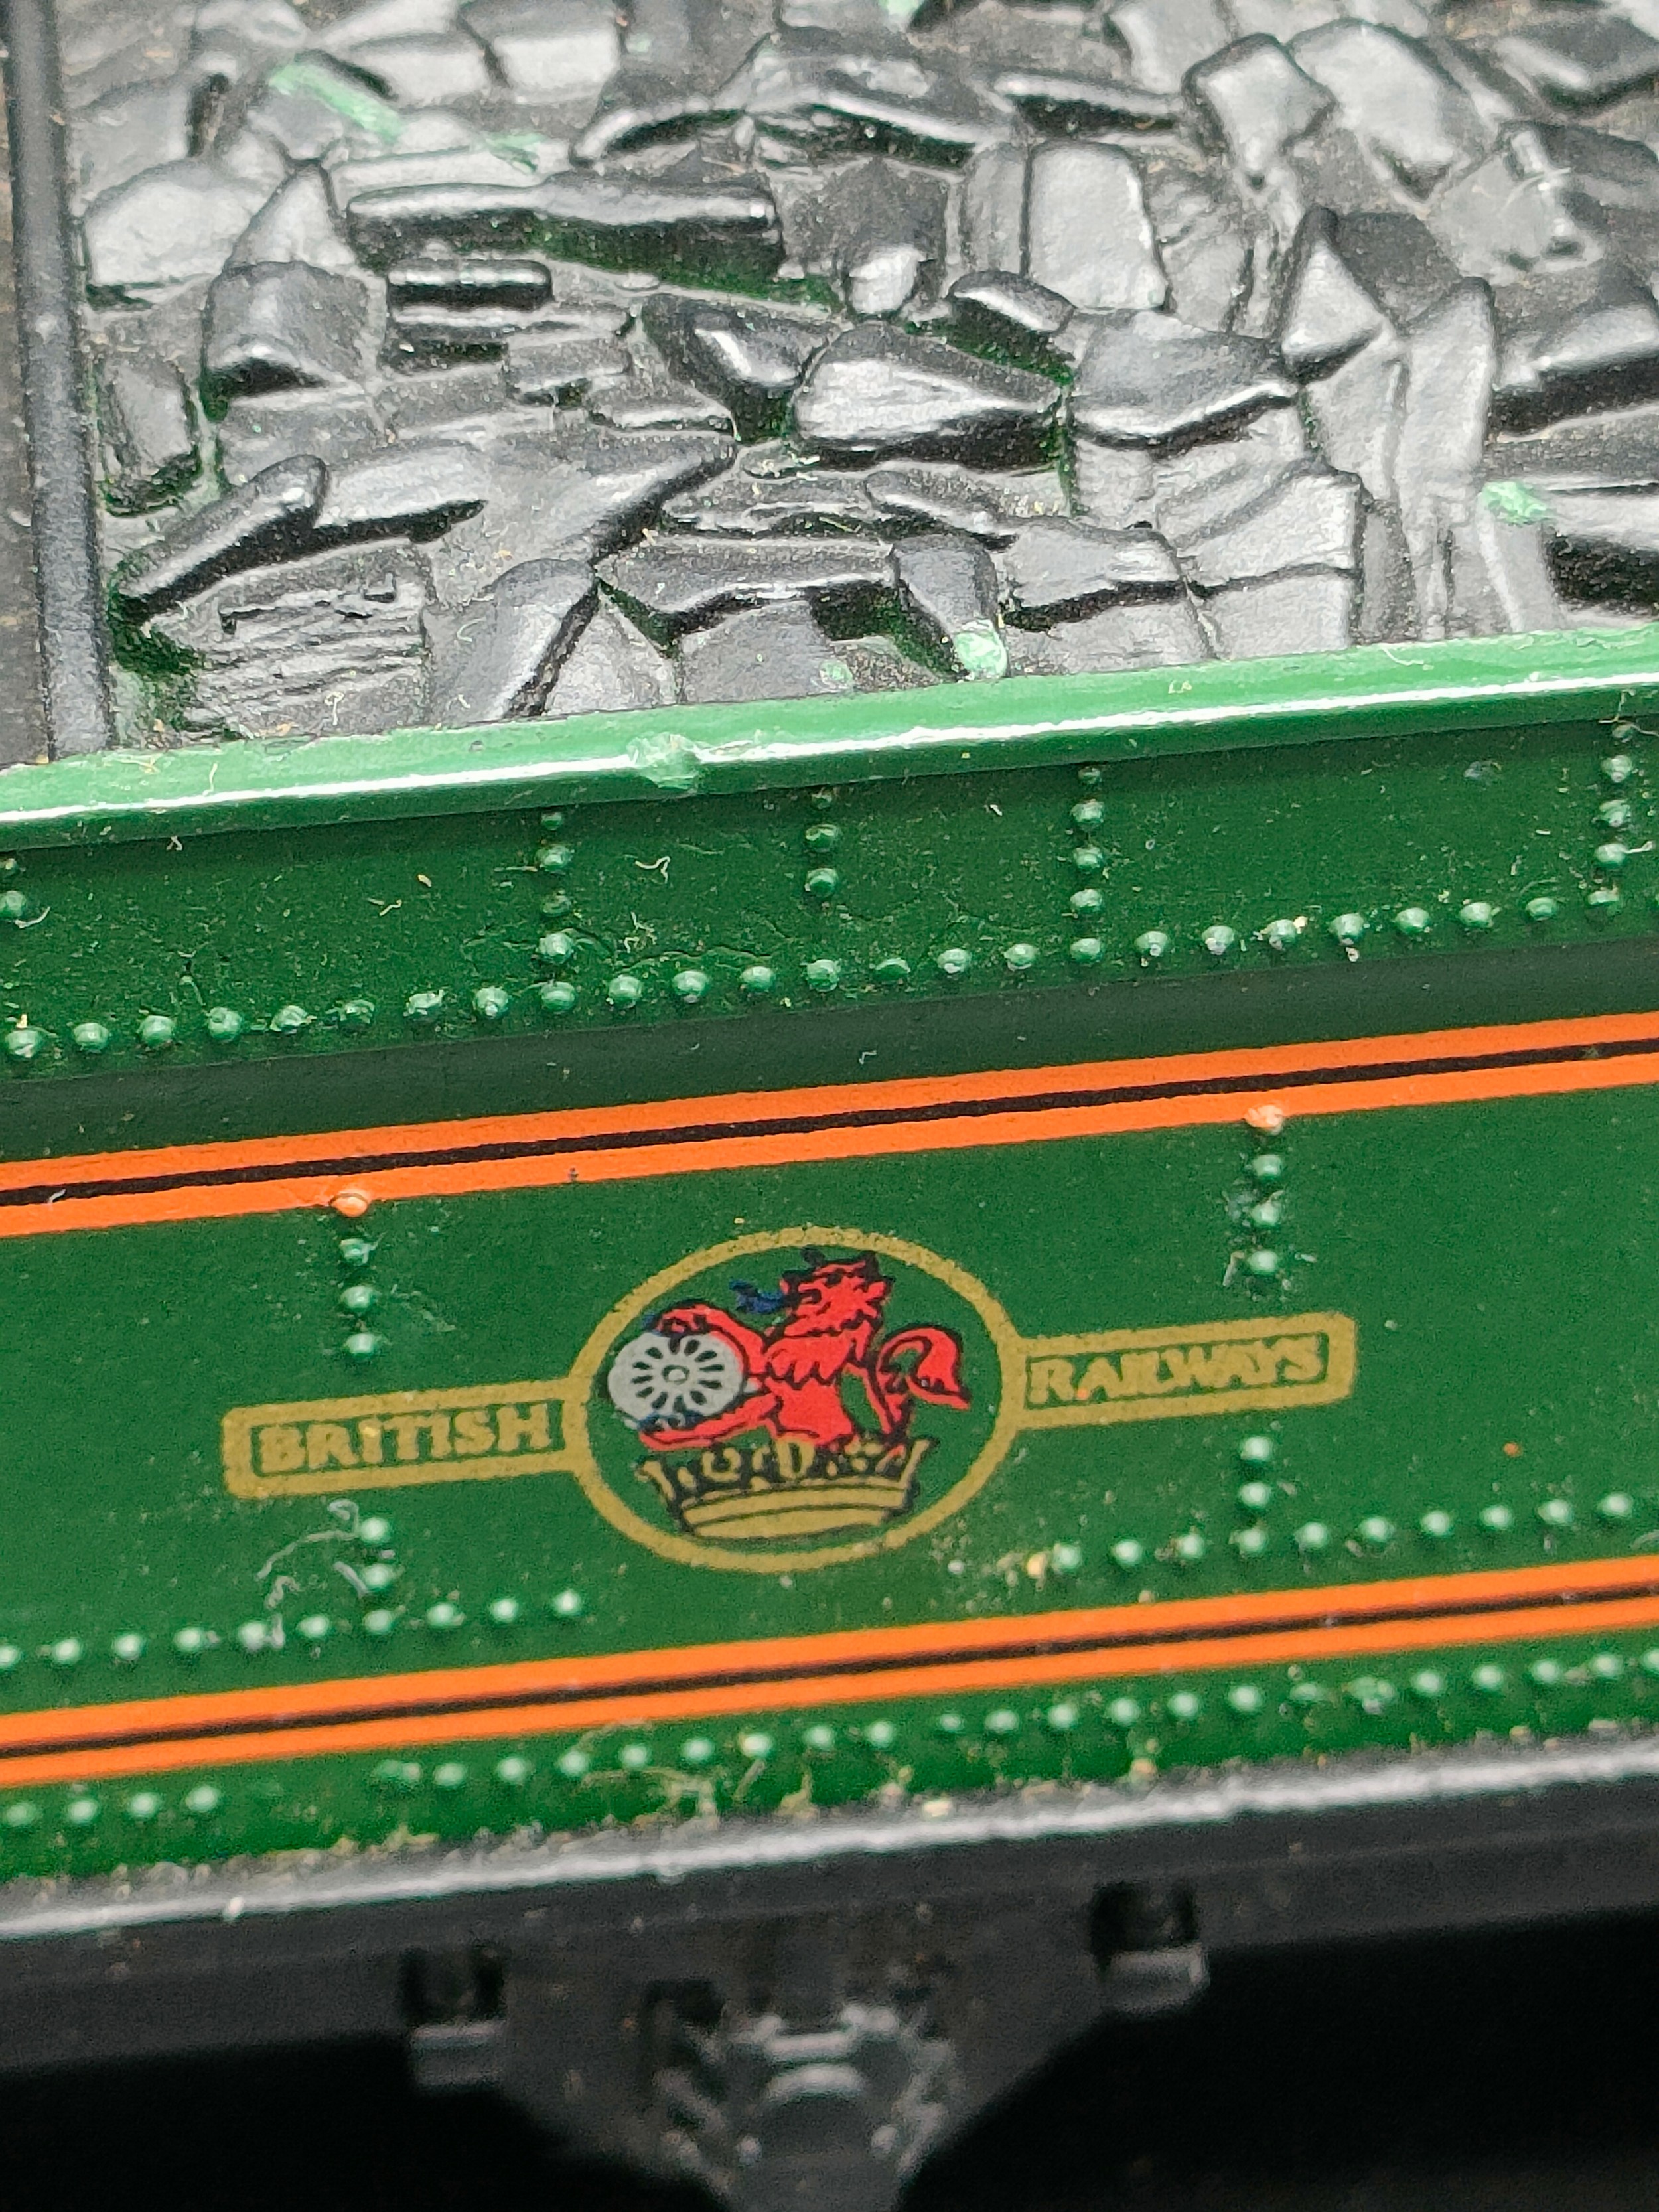 British railways Pen Castle loco and tender. - Image 3 of 4